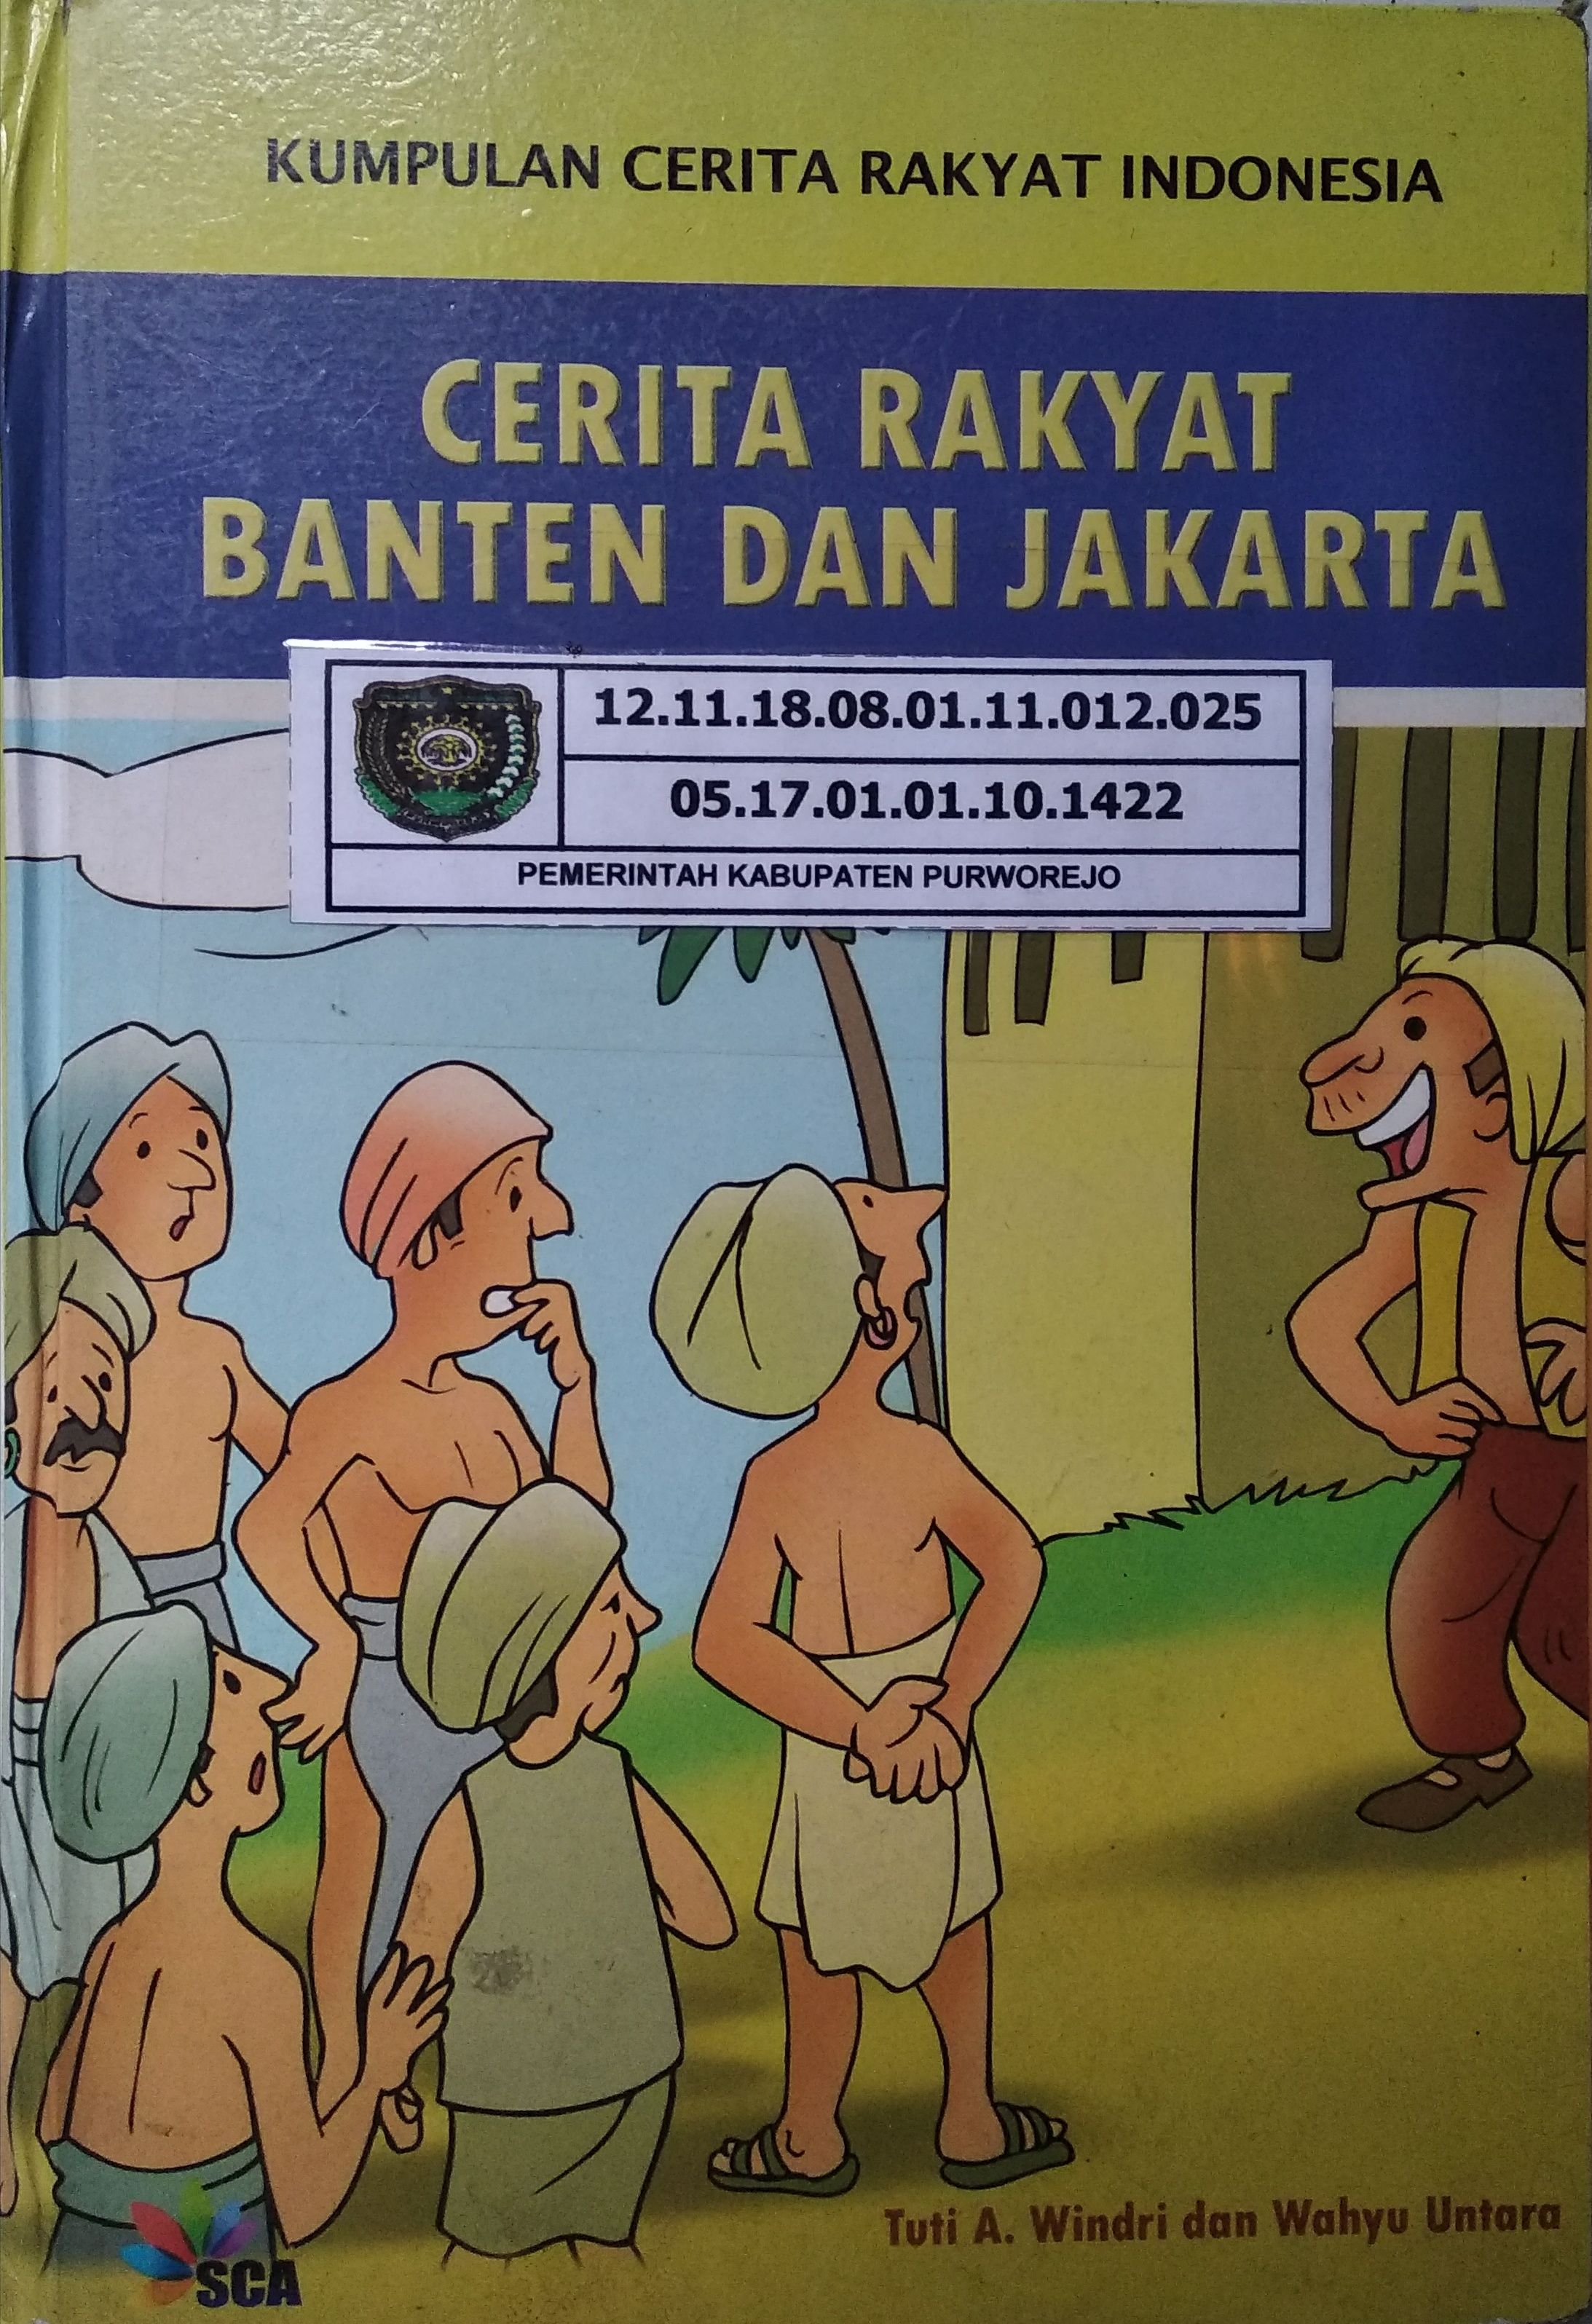 Resensi Buku Cerita Rakyat Banten Dan Jakarta Halaman 1 Kompasiana Com